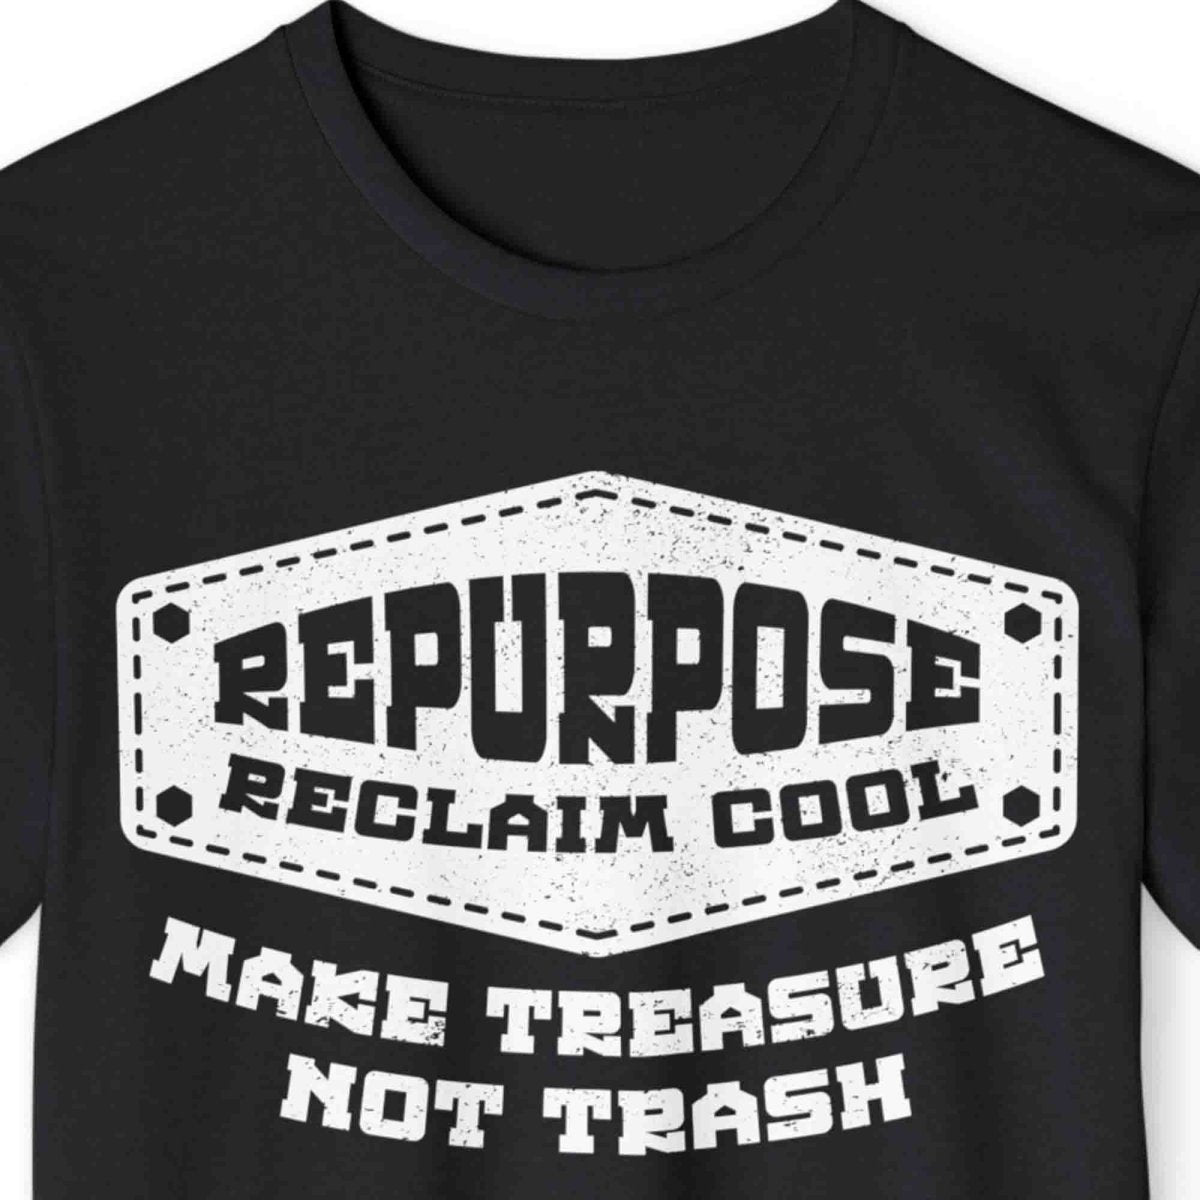 Repurpose Organic Cotton Recycled Polyester Premium T-Shirt, Reclaim Cool, Make Treasure Not Trash, Tree Huggers Union